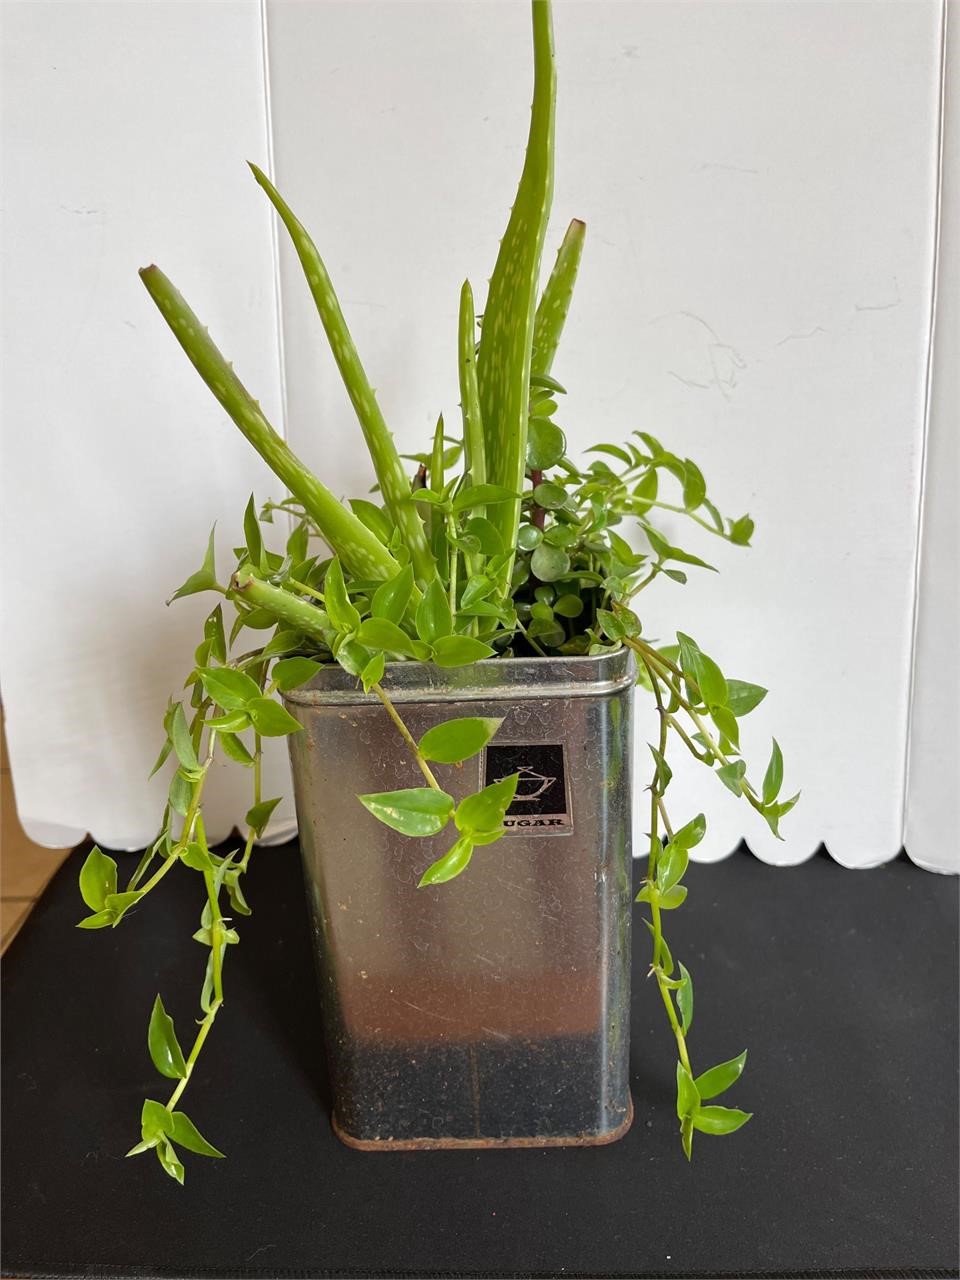 Live Succulents in metal planter 19”